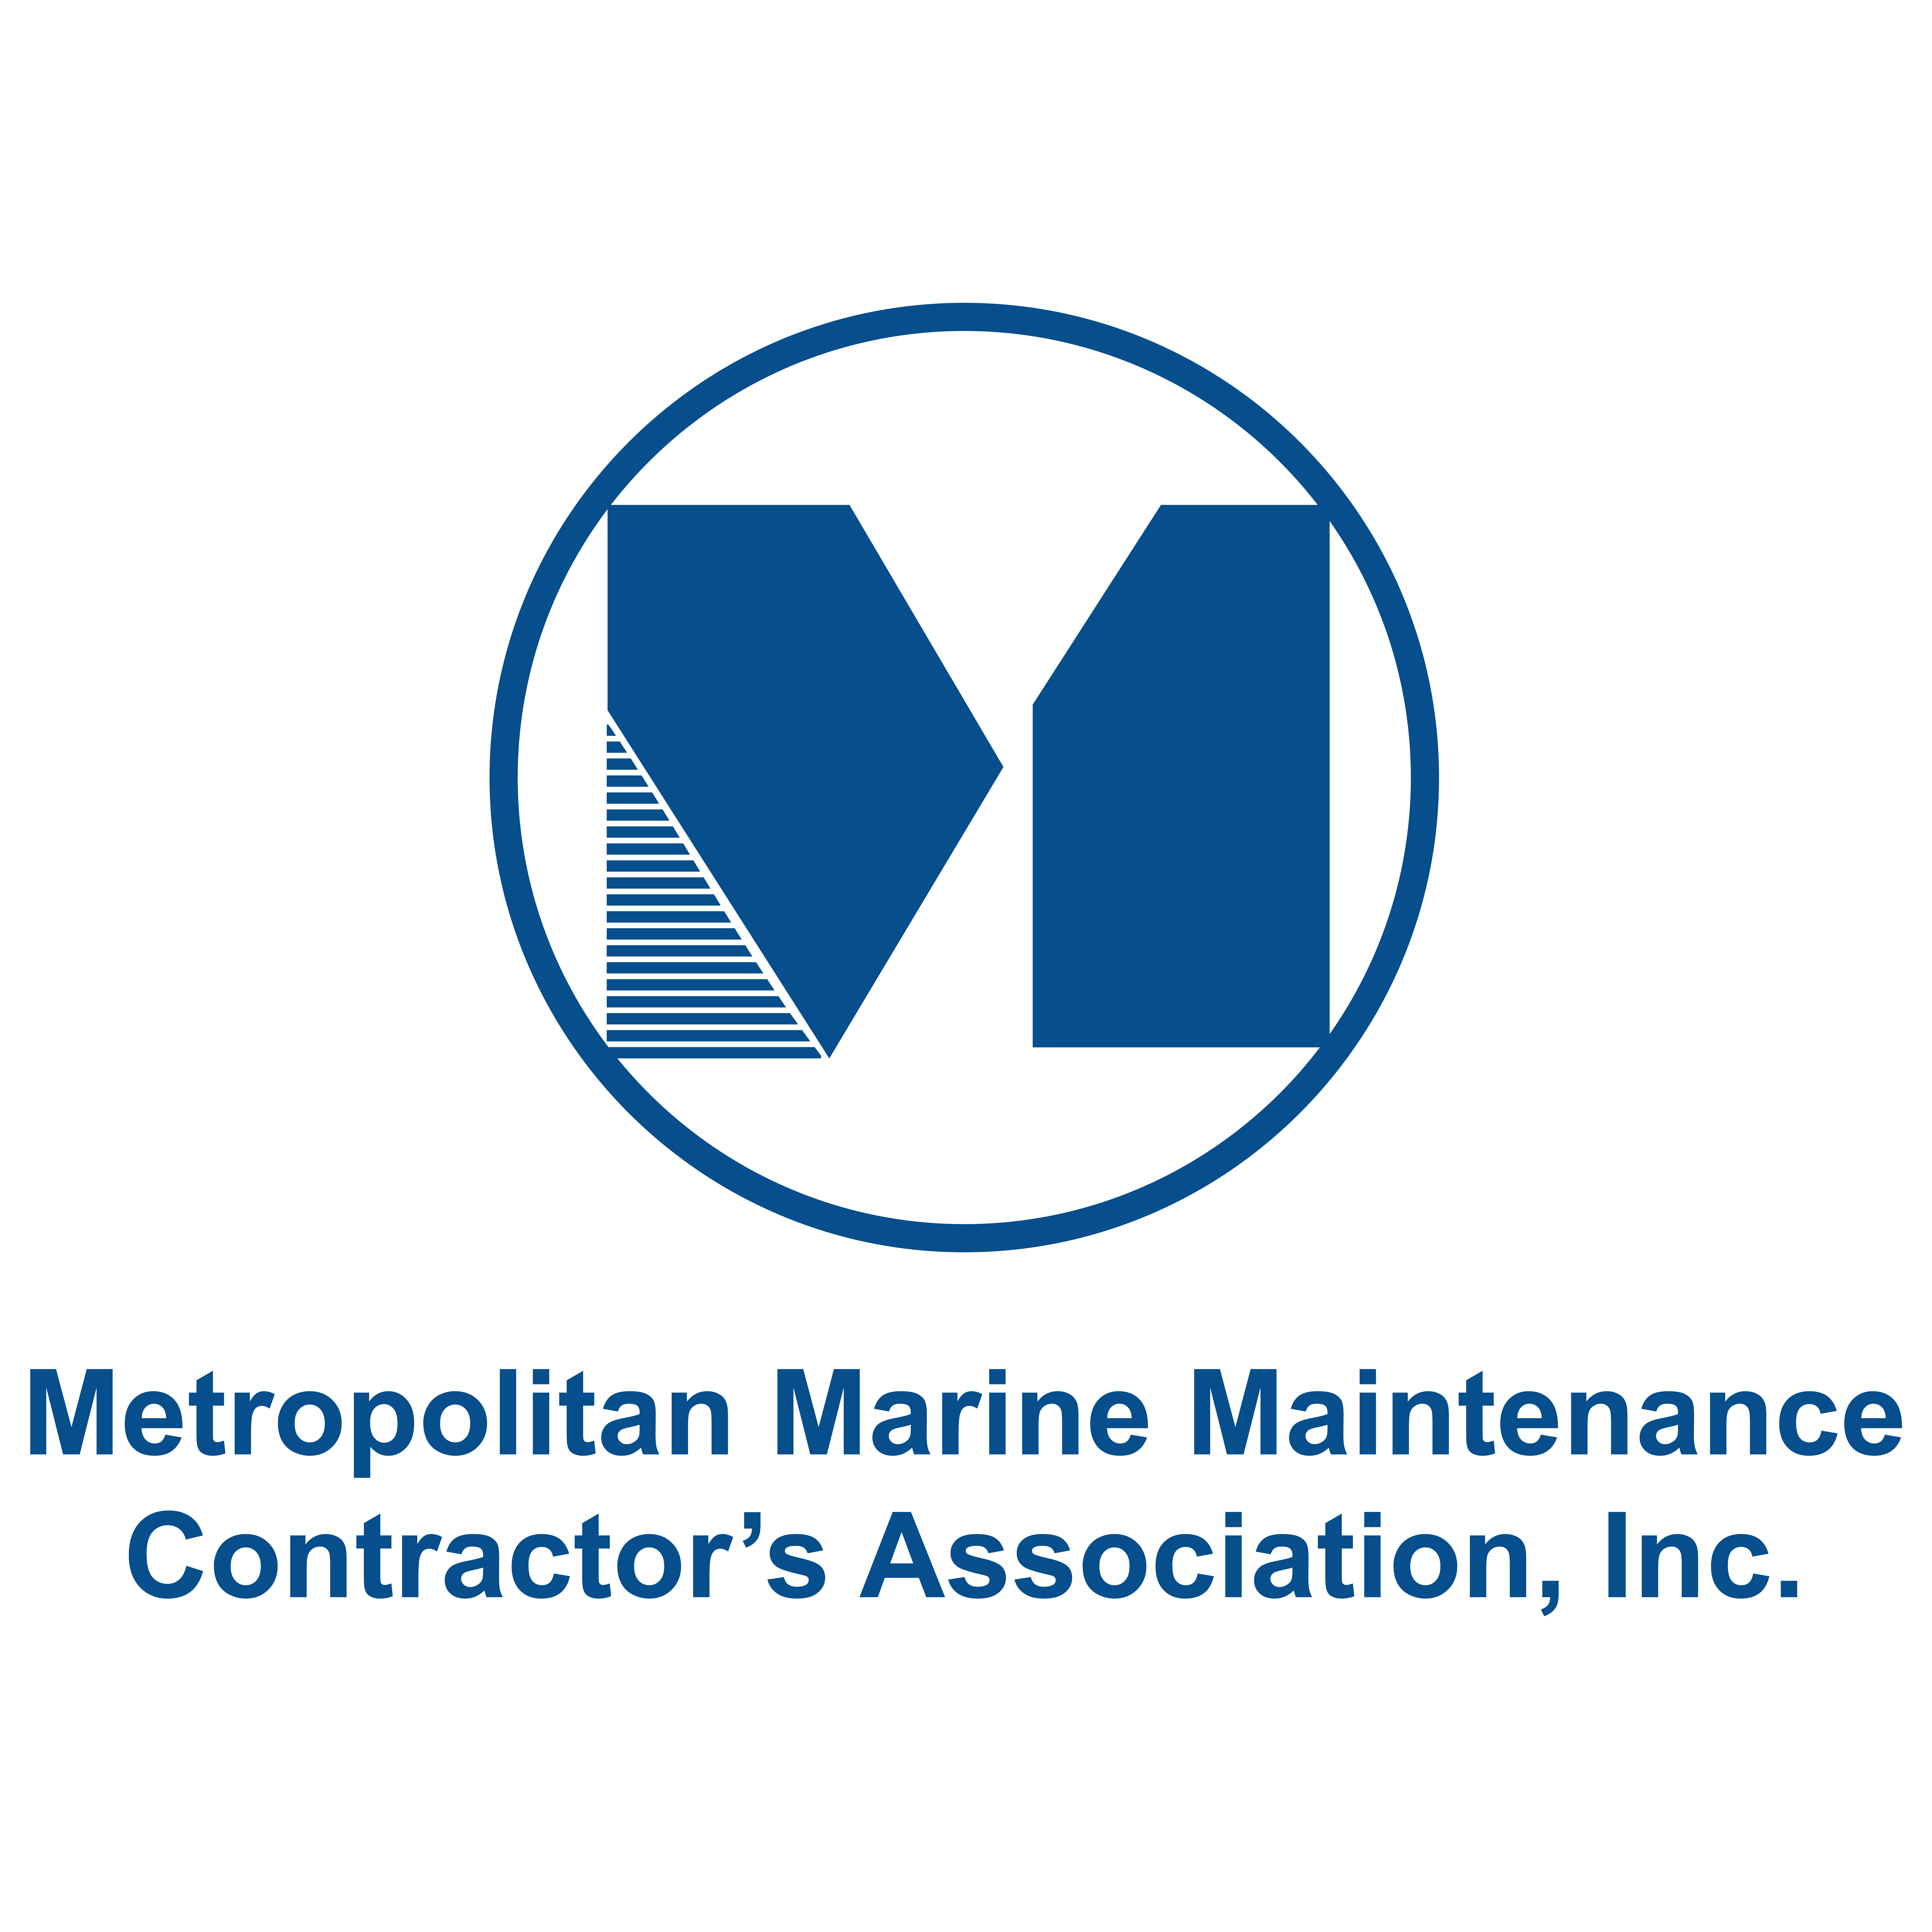 Metropolitan Marine Maintenance Contractors' Association, Inc. Logo